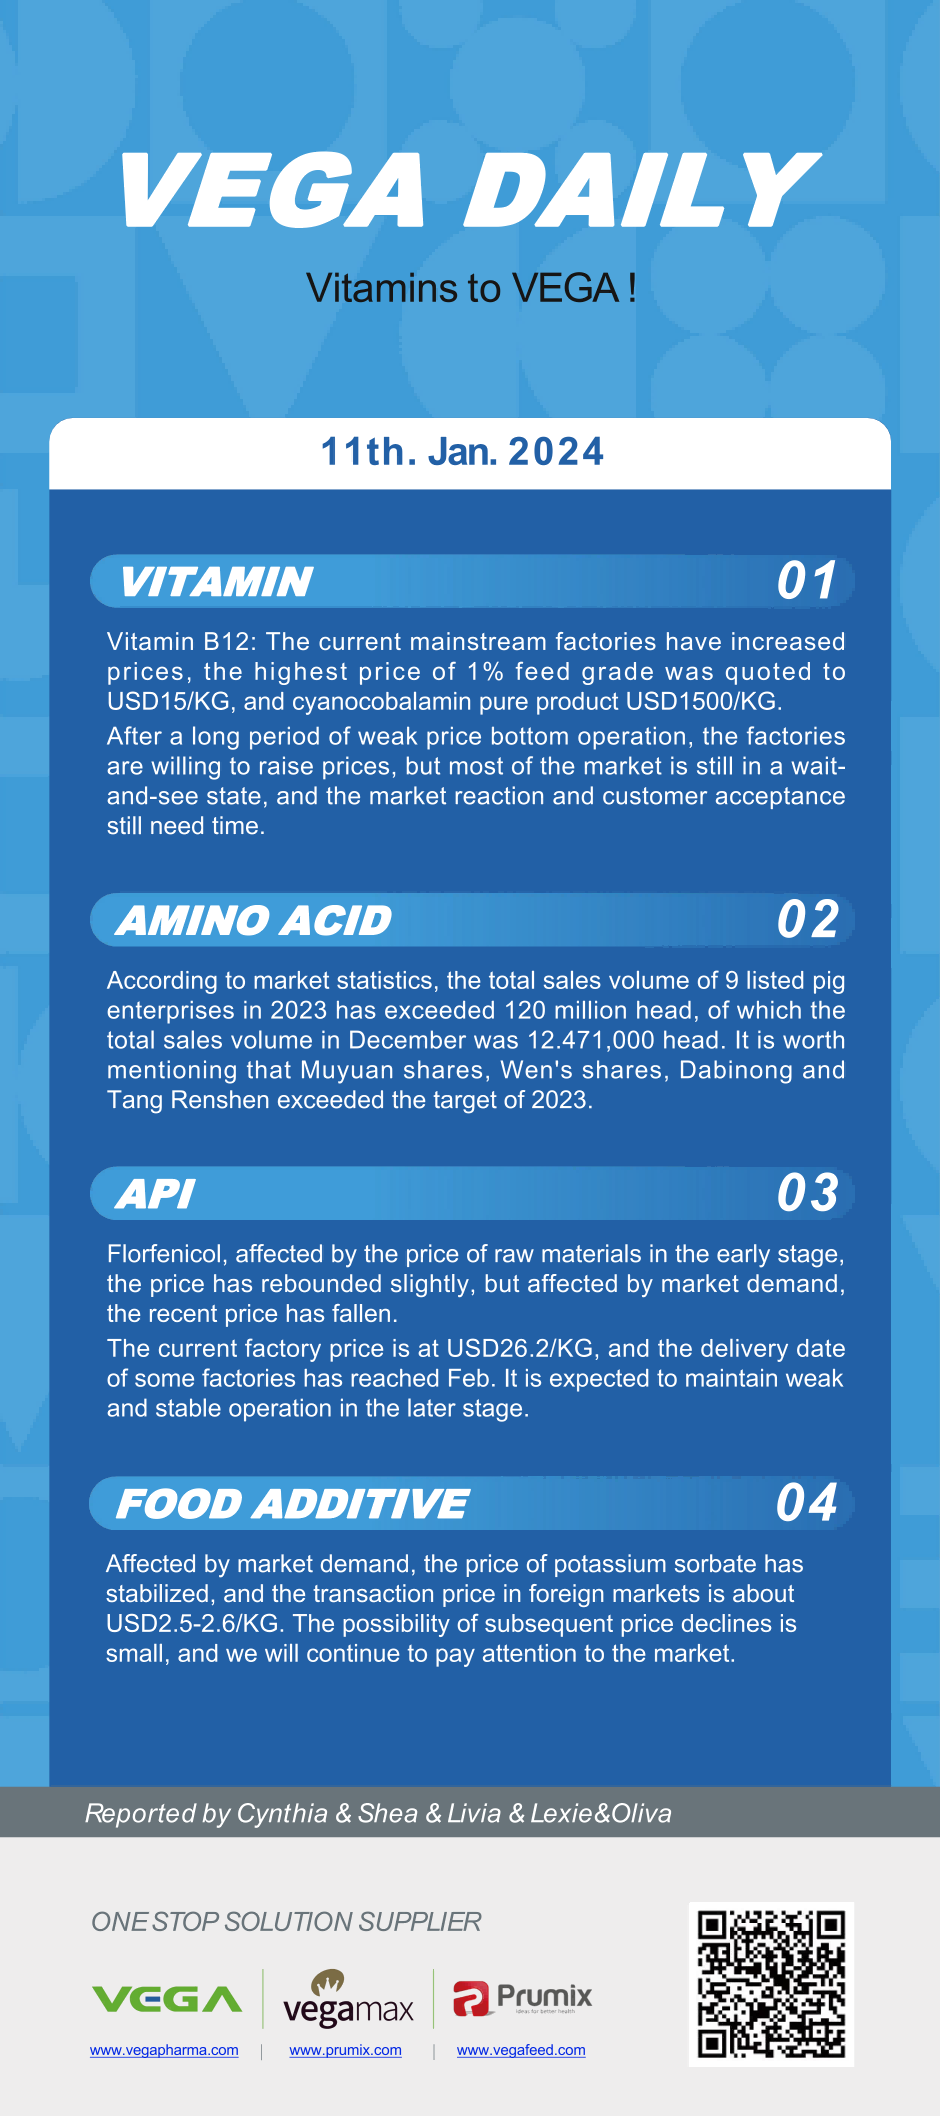 Vega Daily Dated on Jan 11th 2024 Vitamin Amino Acid APl Food Additives.png